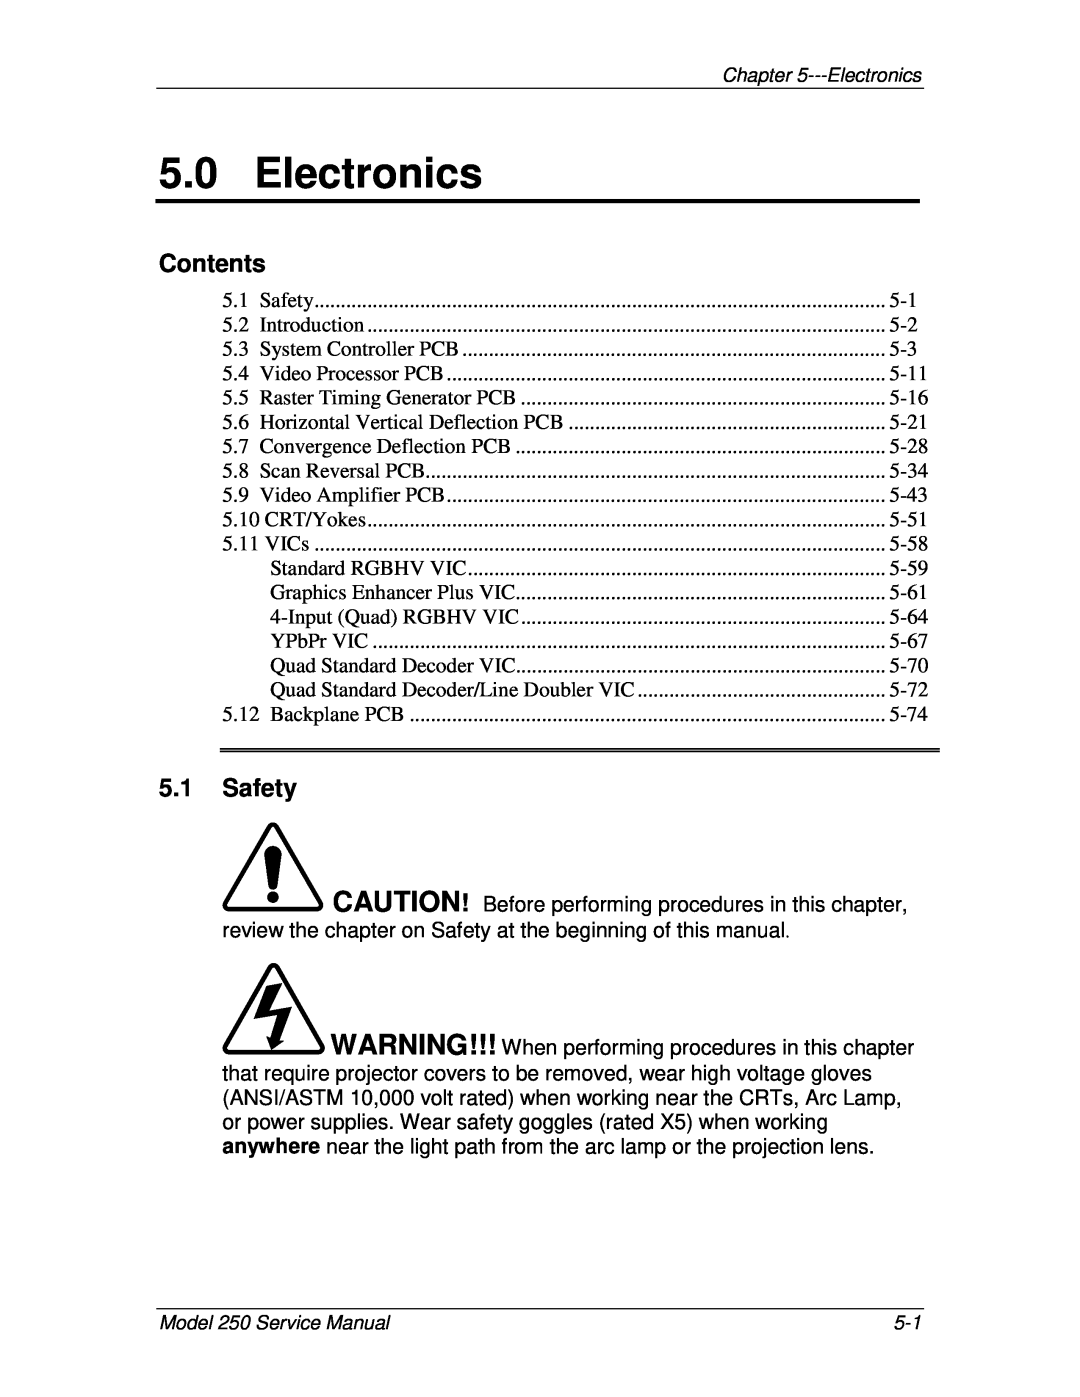 JVC 250 service manual Electronics, Safety, Contents 